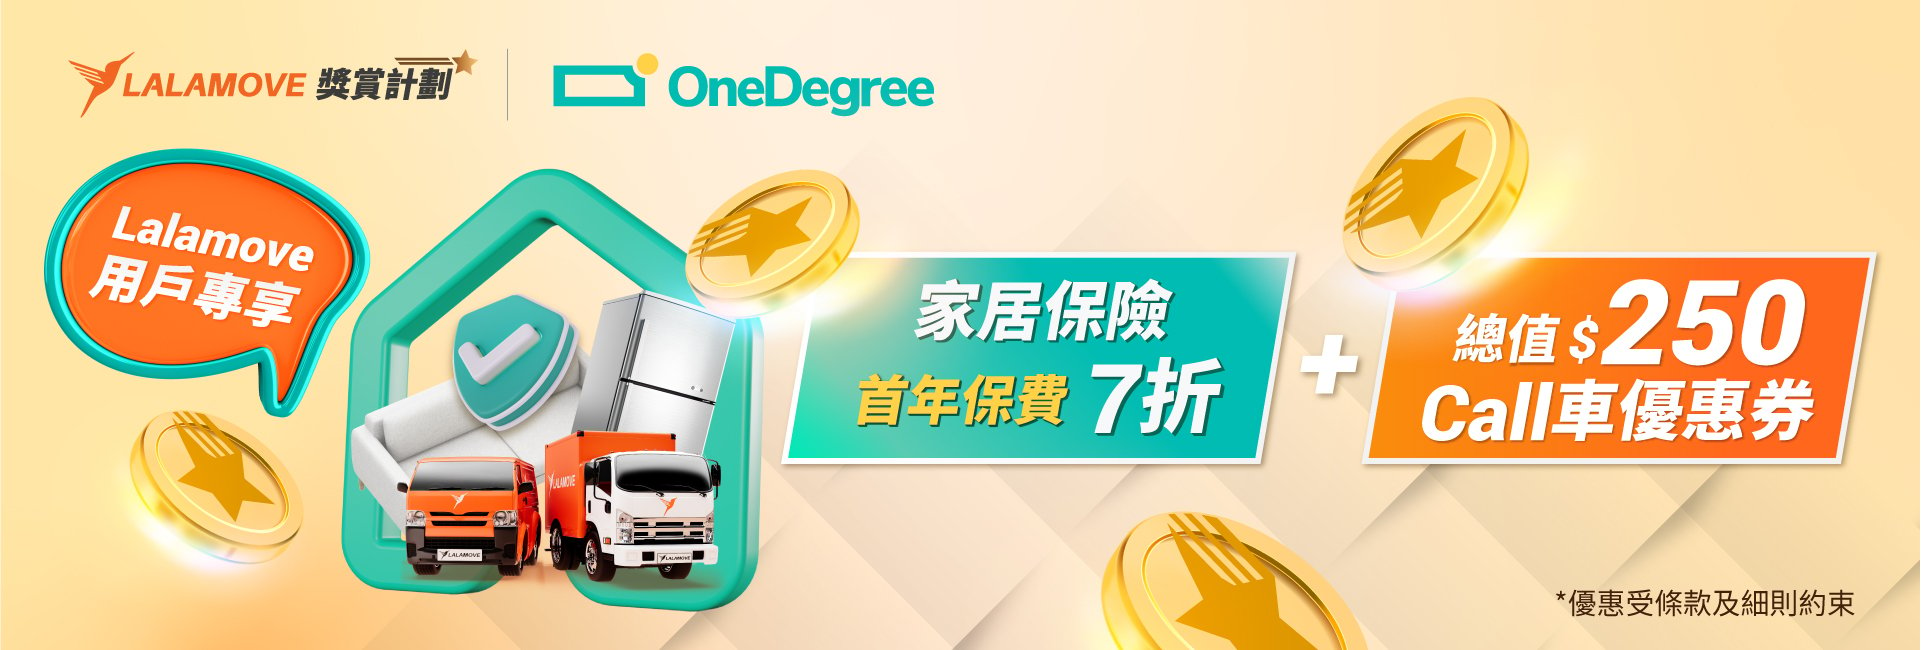 HK_fb_ad_Rewards_OneDegree_202403014_1920x650 (1)